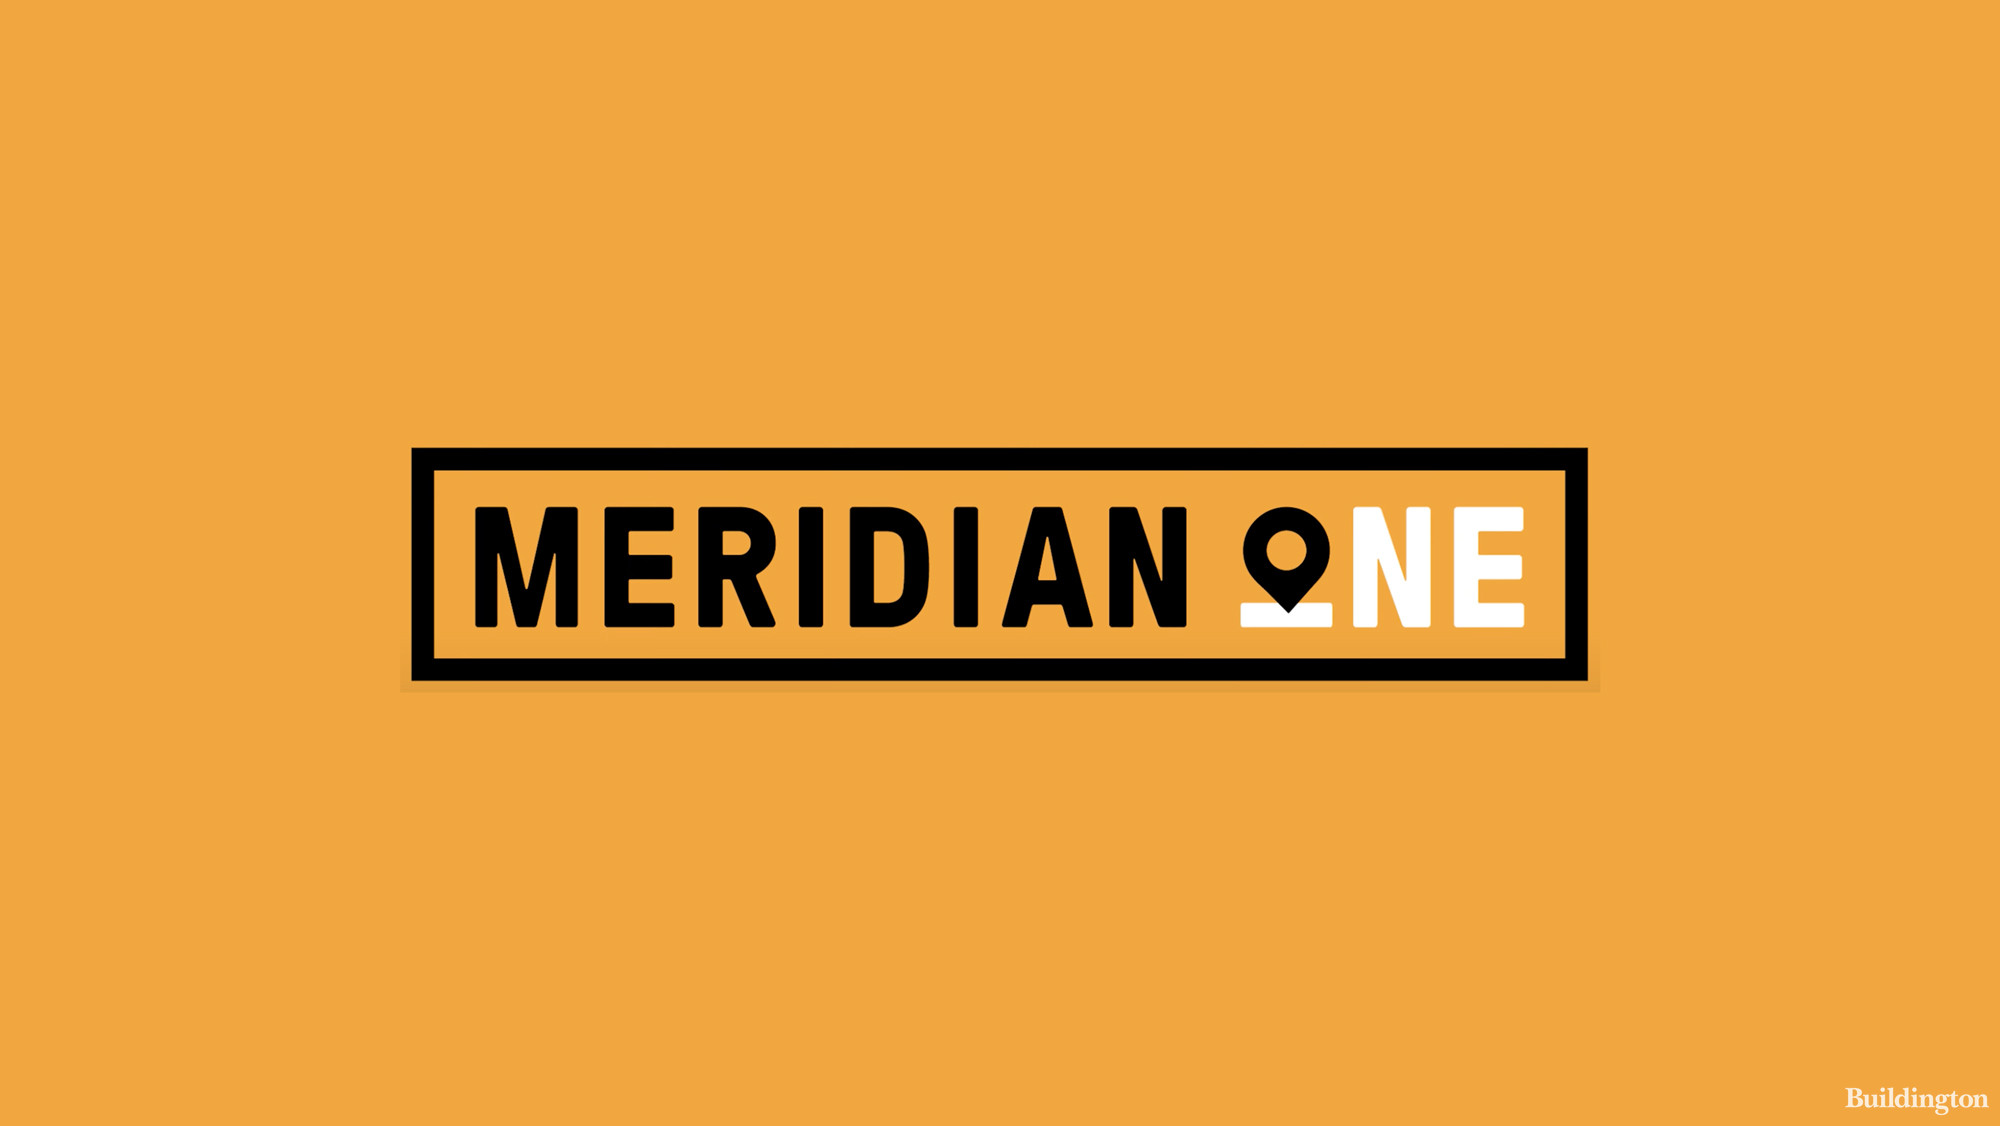 Meridian One development logo